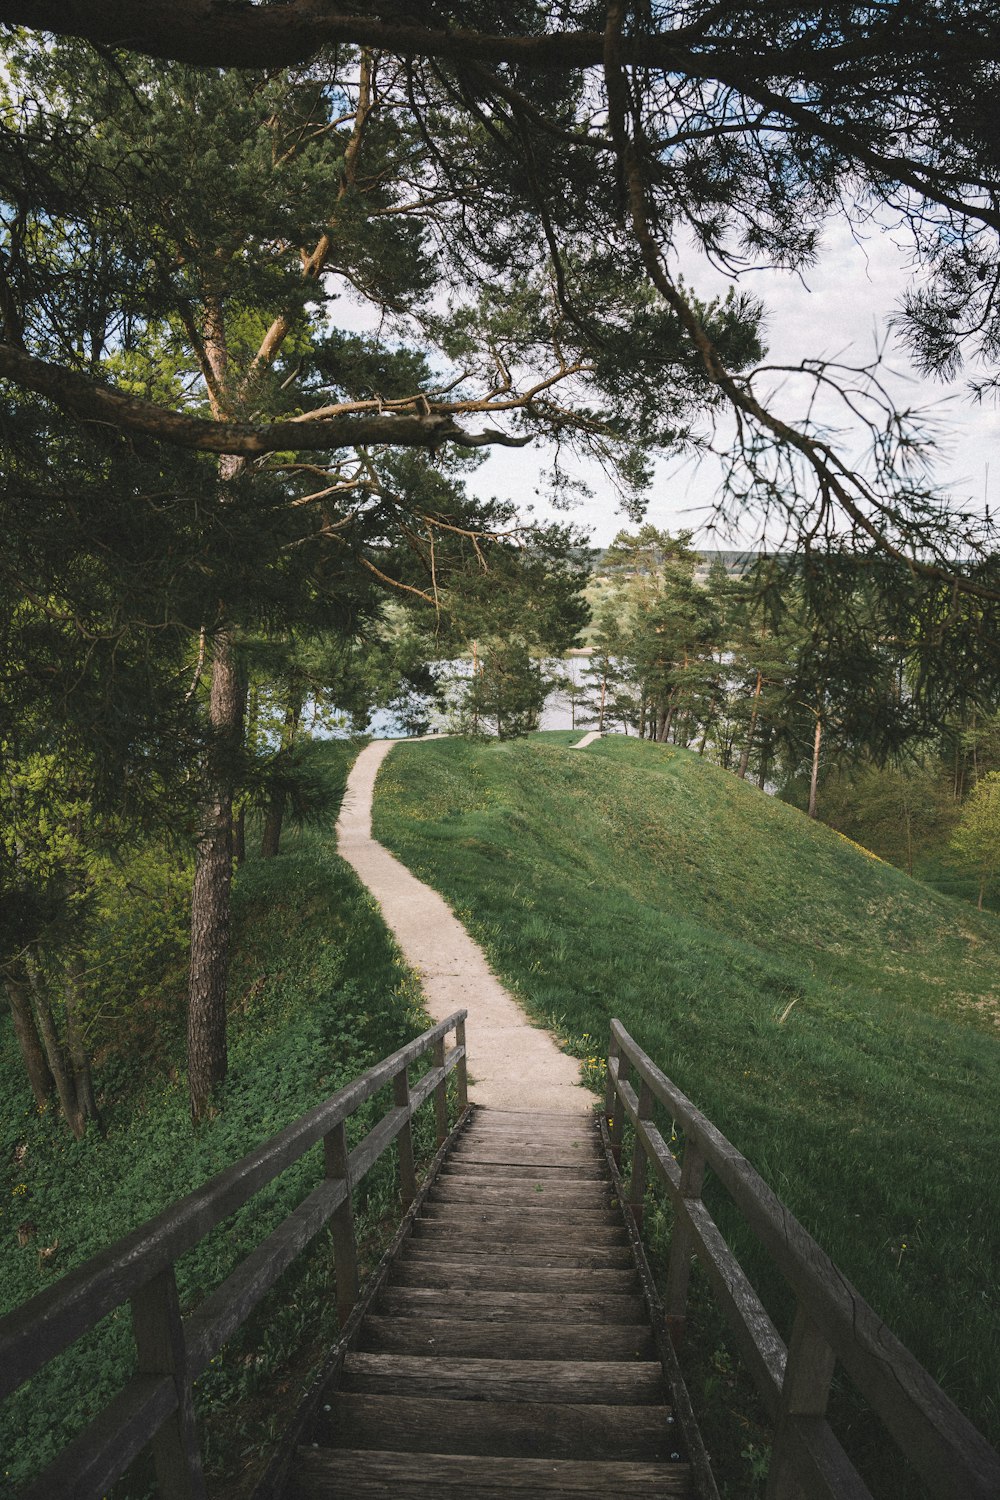 a wooden bridge over a grassy hill